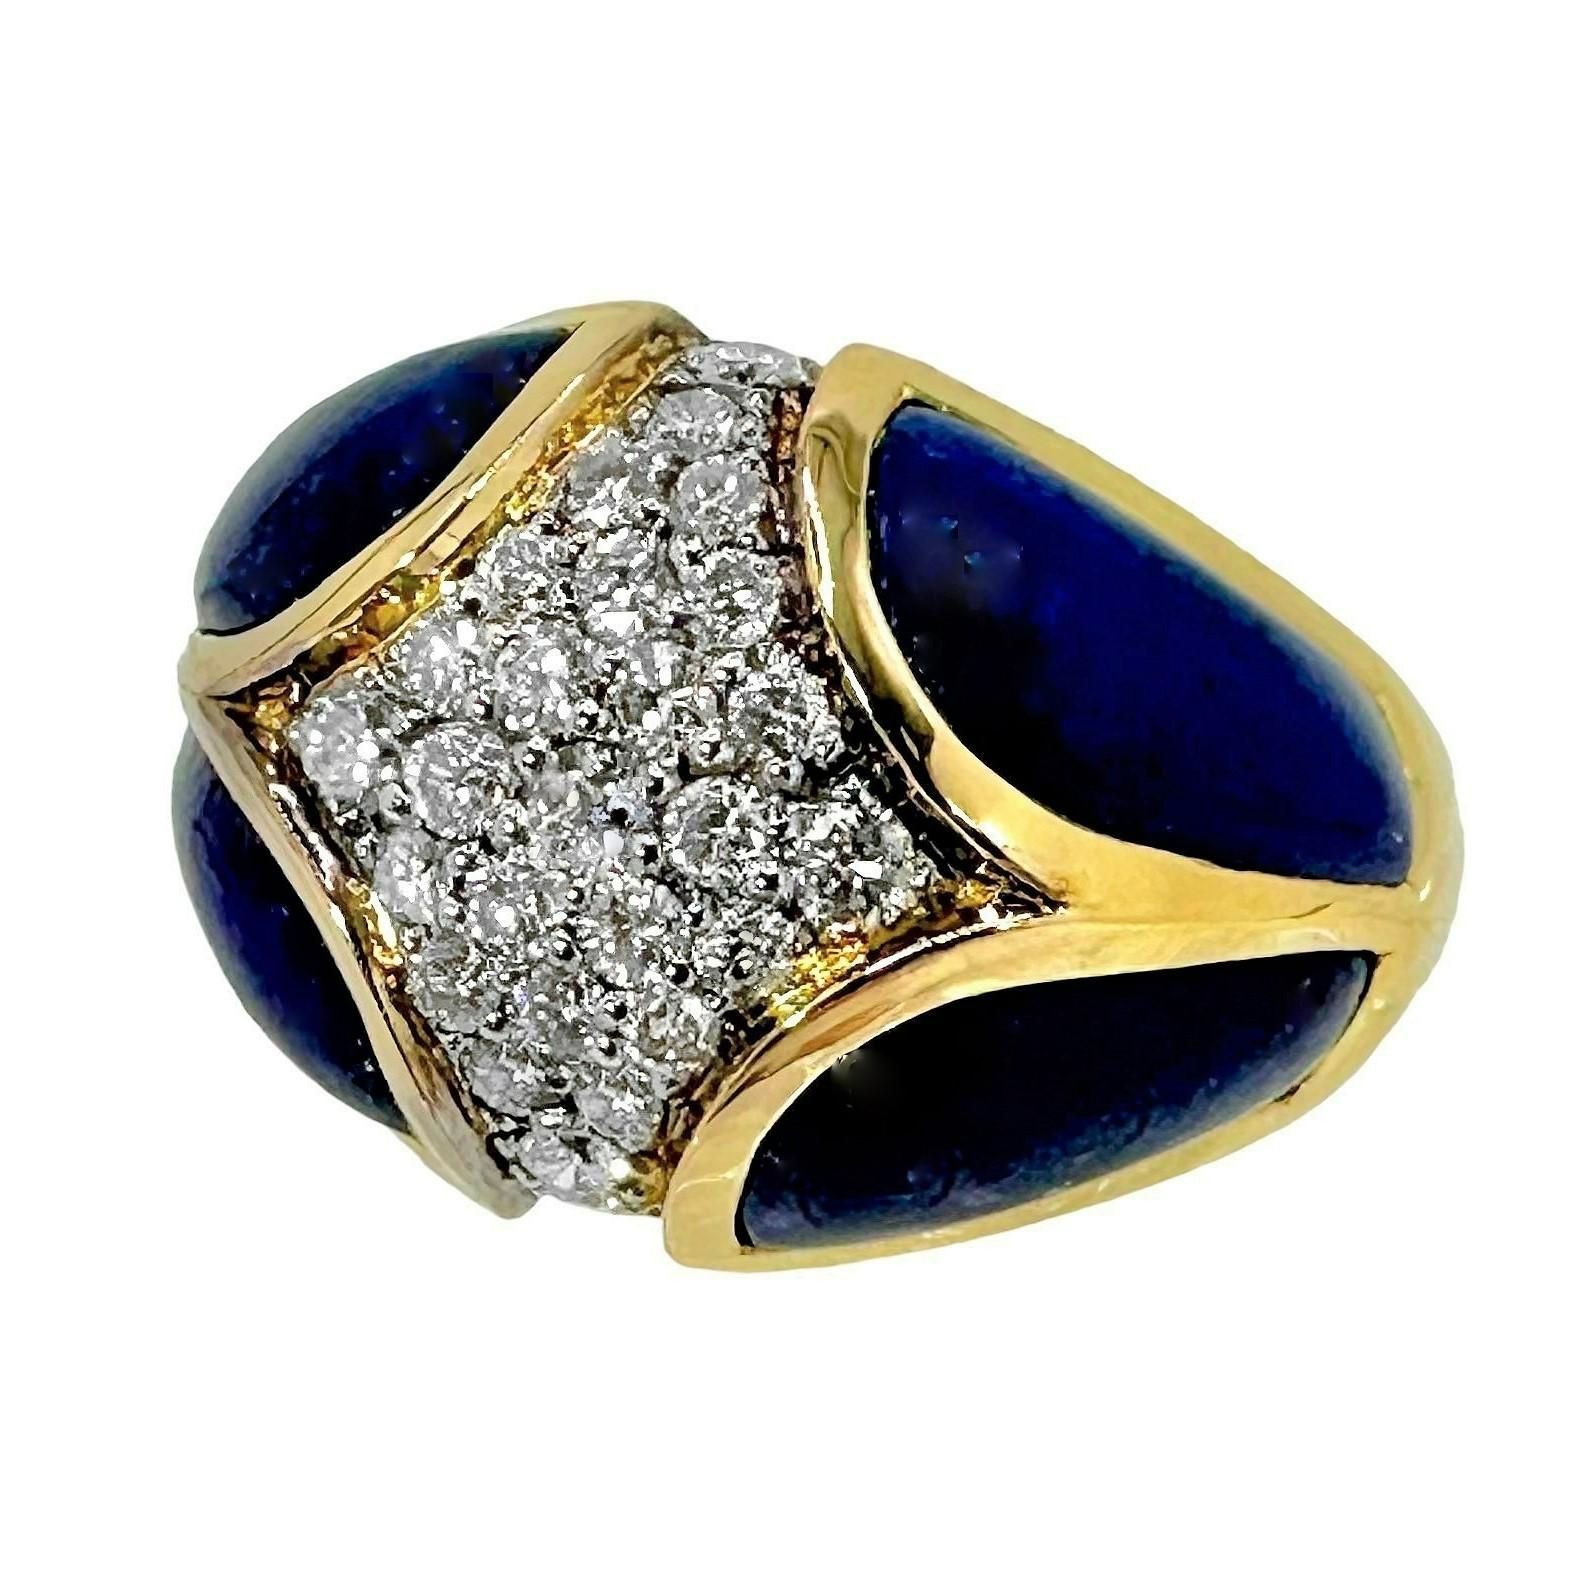 Women's Late-20th Century 18k Yellow Gold, Lapis-Lazuli and Diamond Fashion Ring For Sale